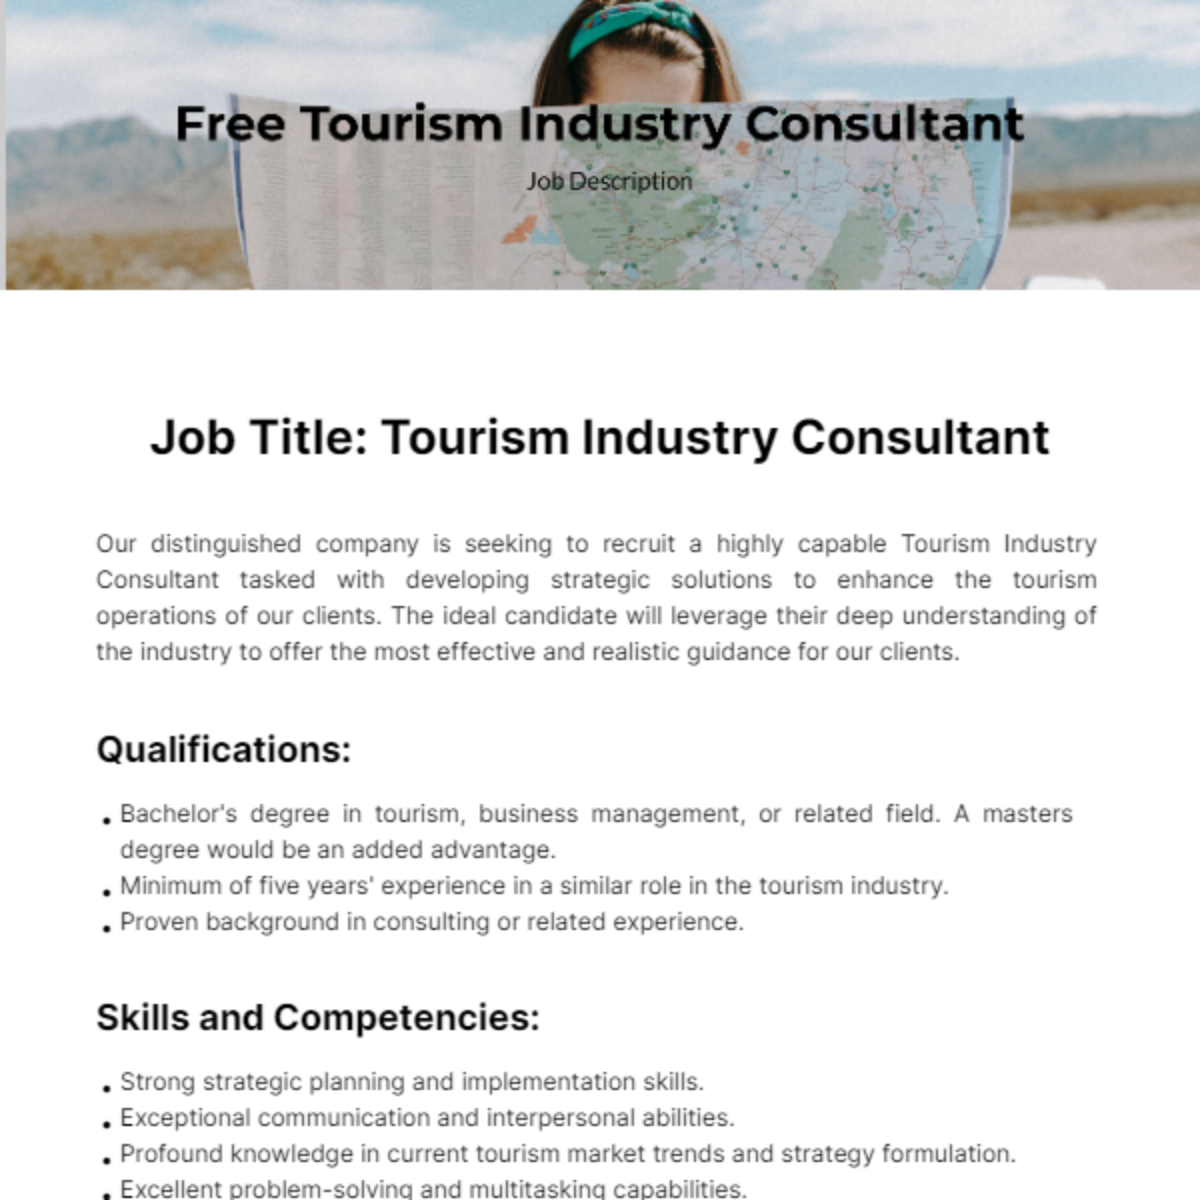 Free Tourism Industry Consultant Job Description Template